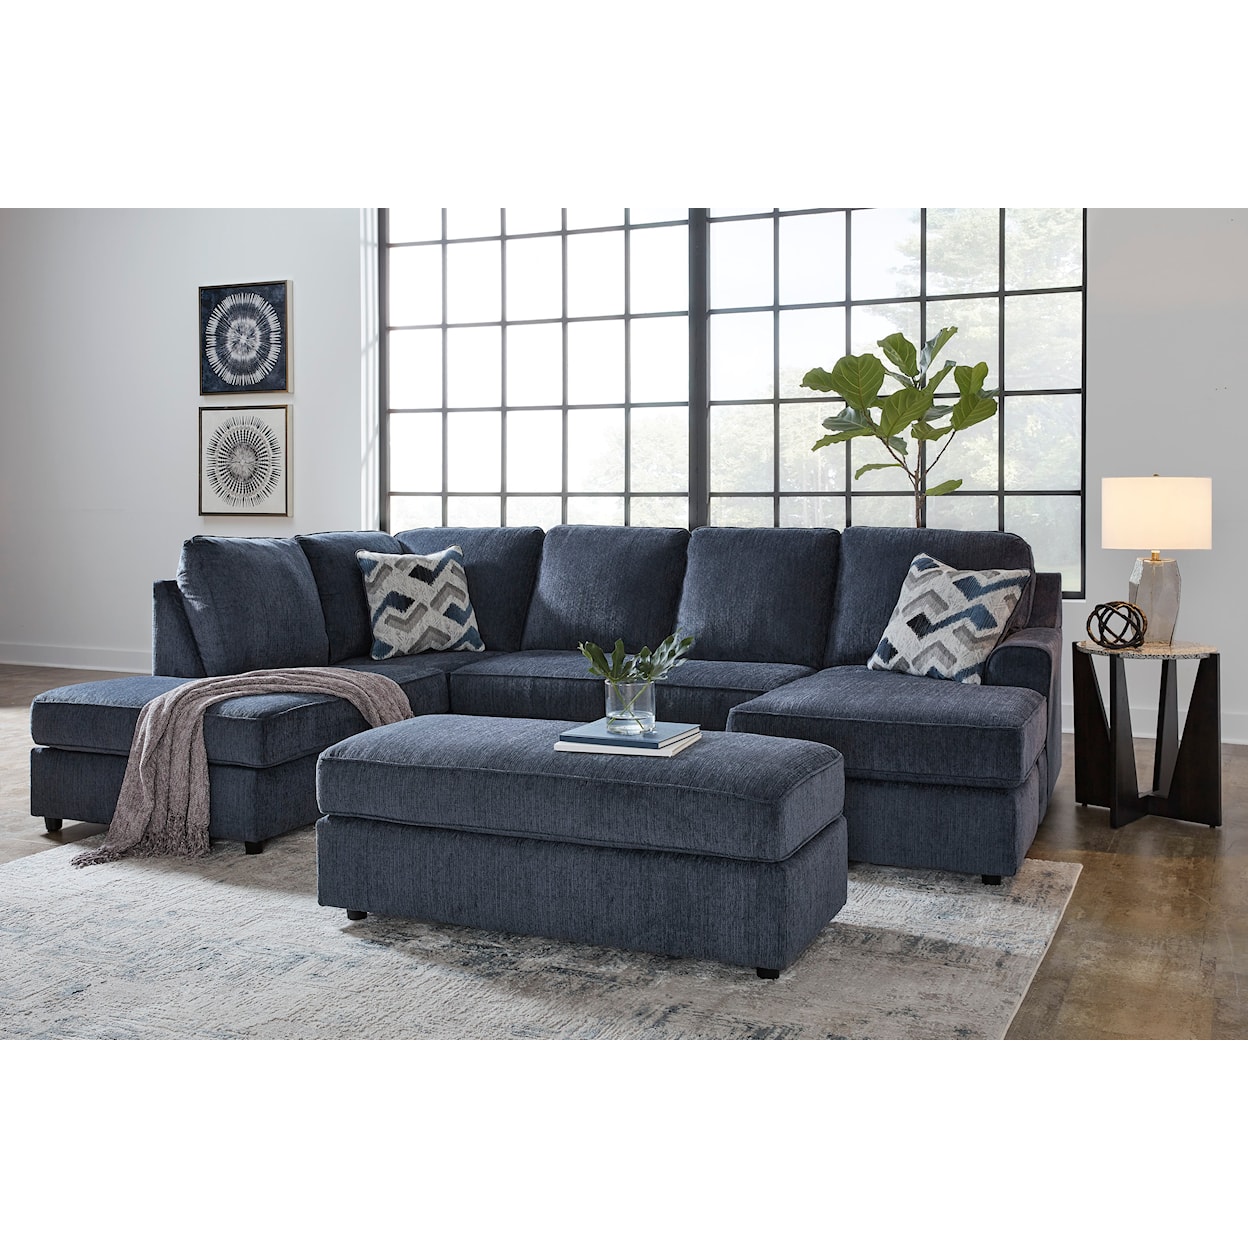 Ashley Furniture Signature Design Albar Place Living Room Set